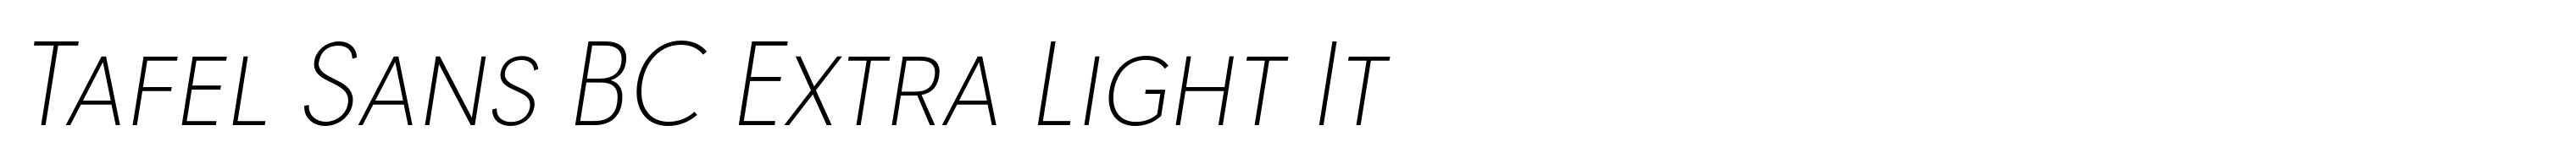 Tafel Sans BC Extra Light It